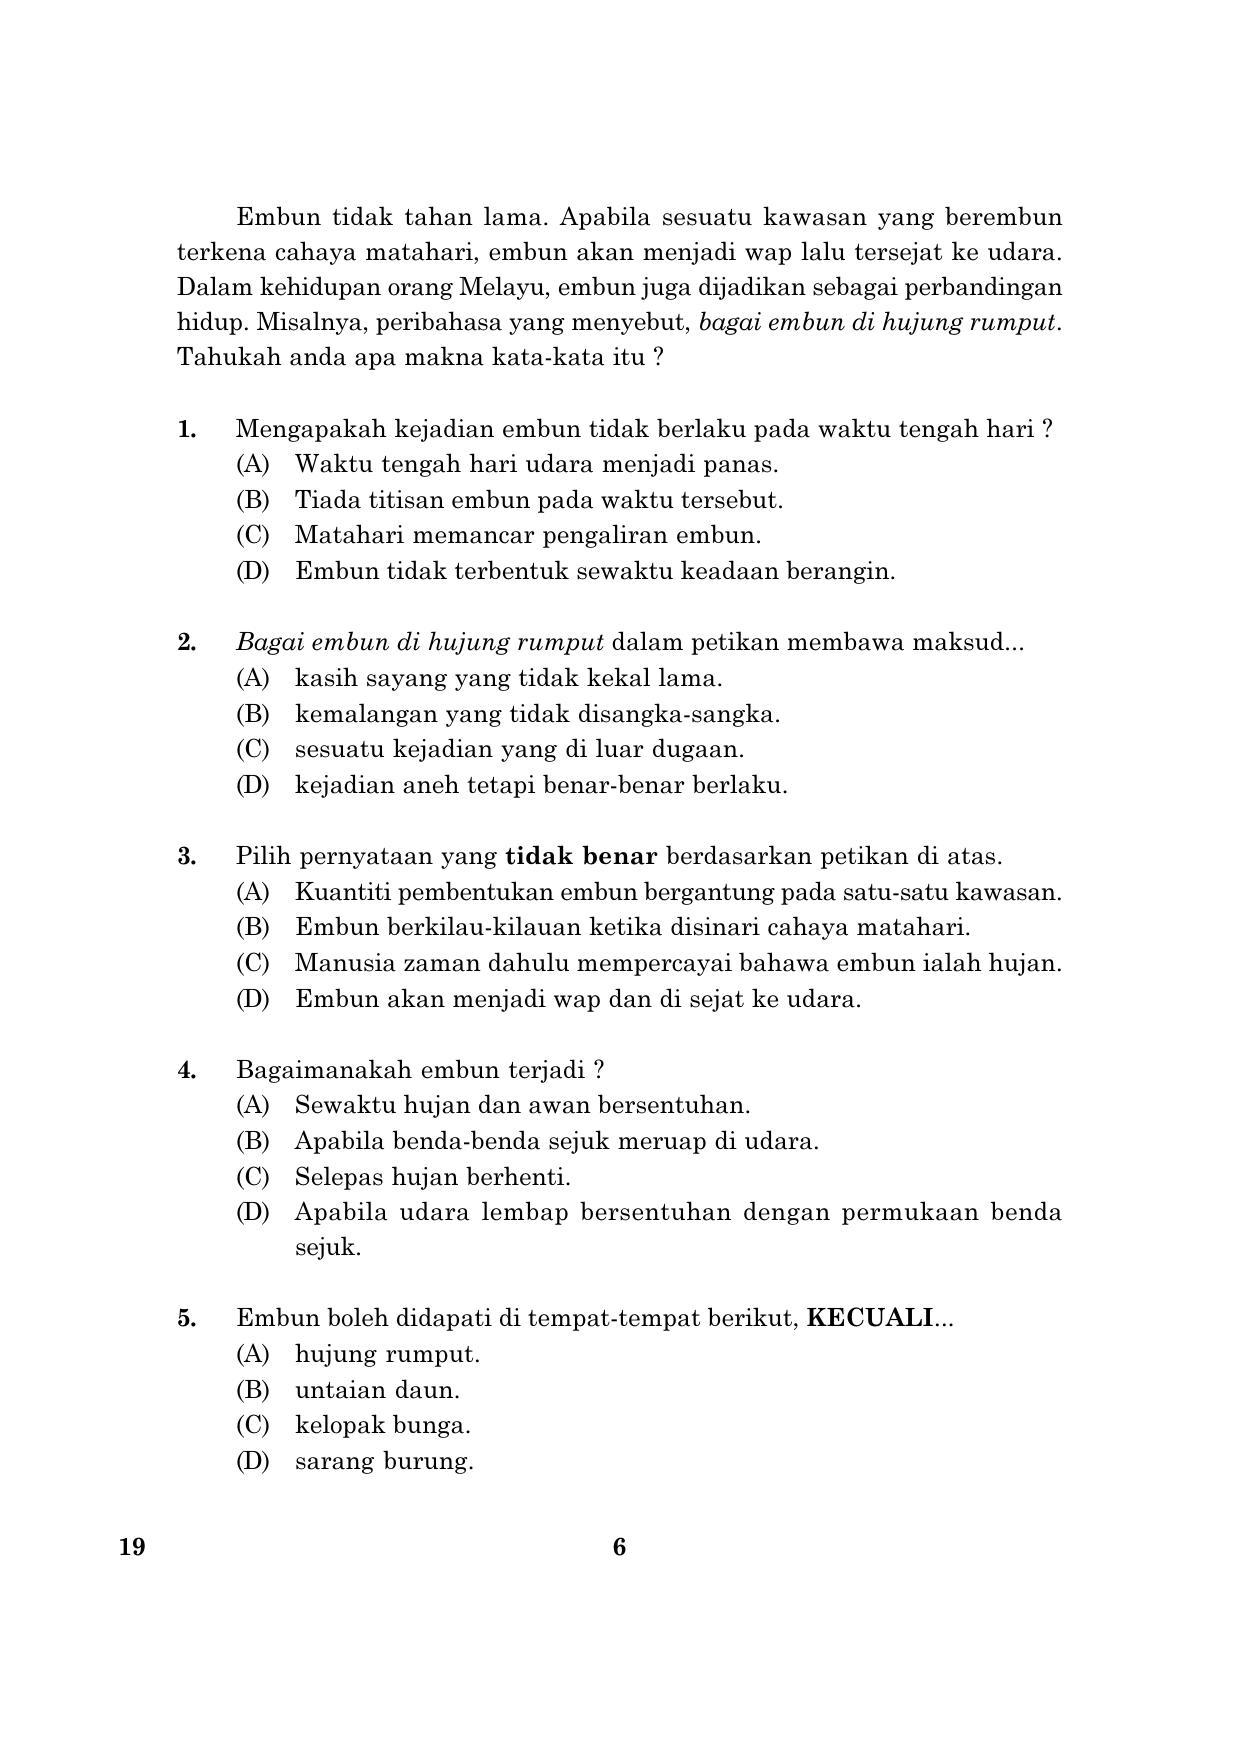 CBSE Class 10 019 Bahasamelayu English 2016 Question Paper - Page 6